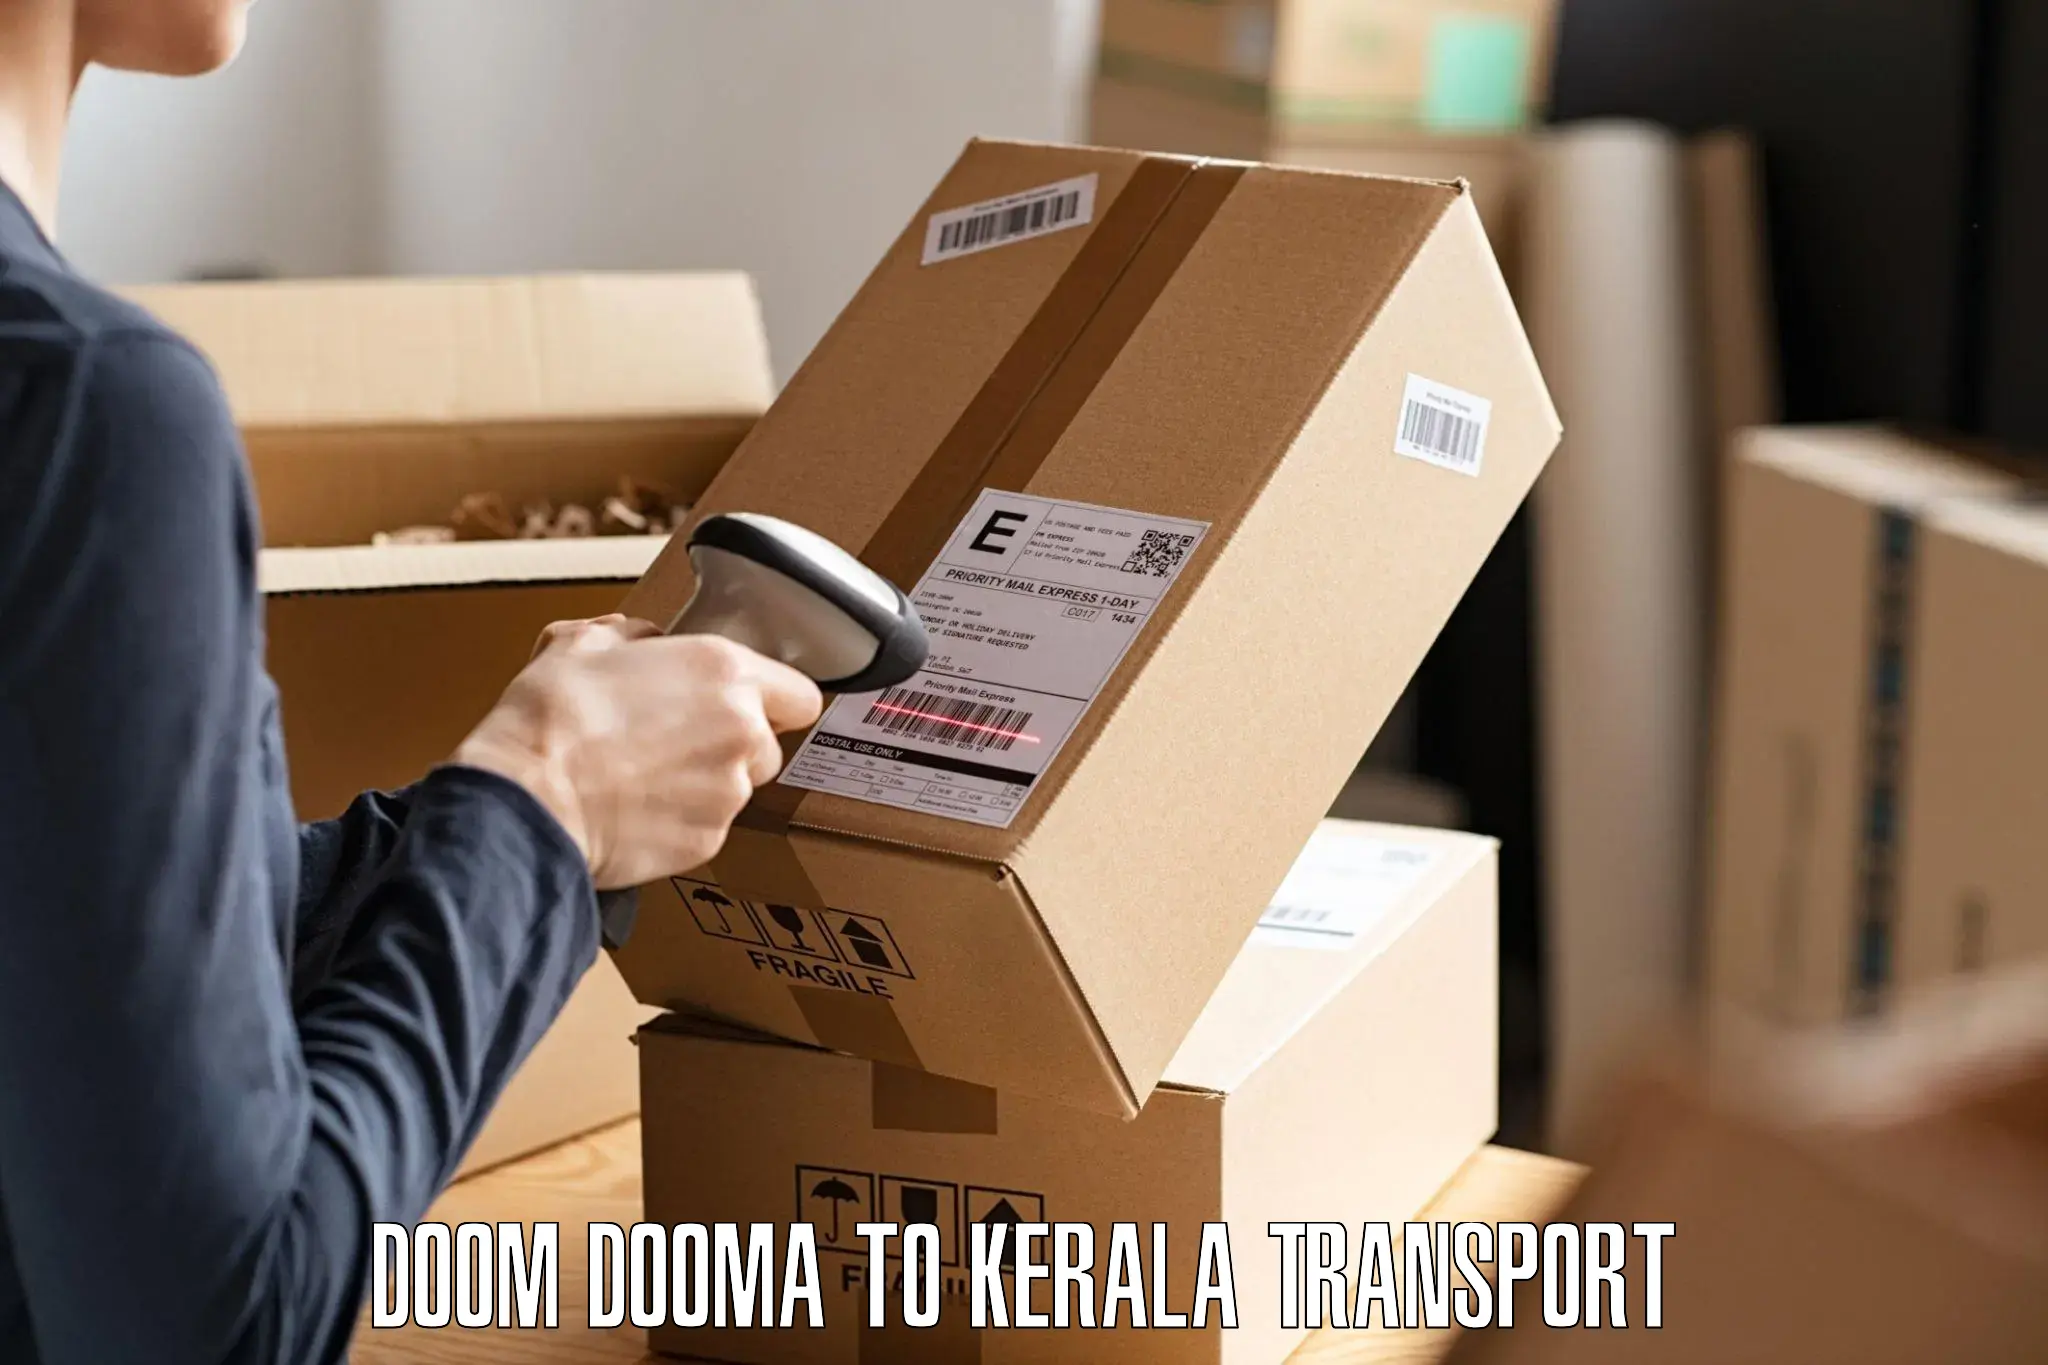 Parcel transport services Doom Dooma to Palai